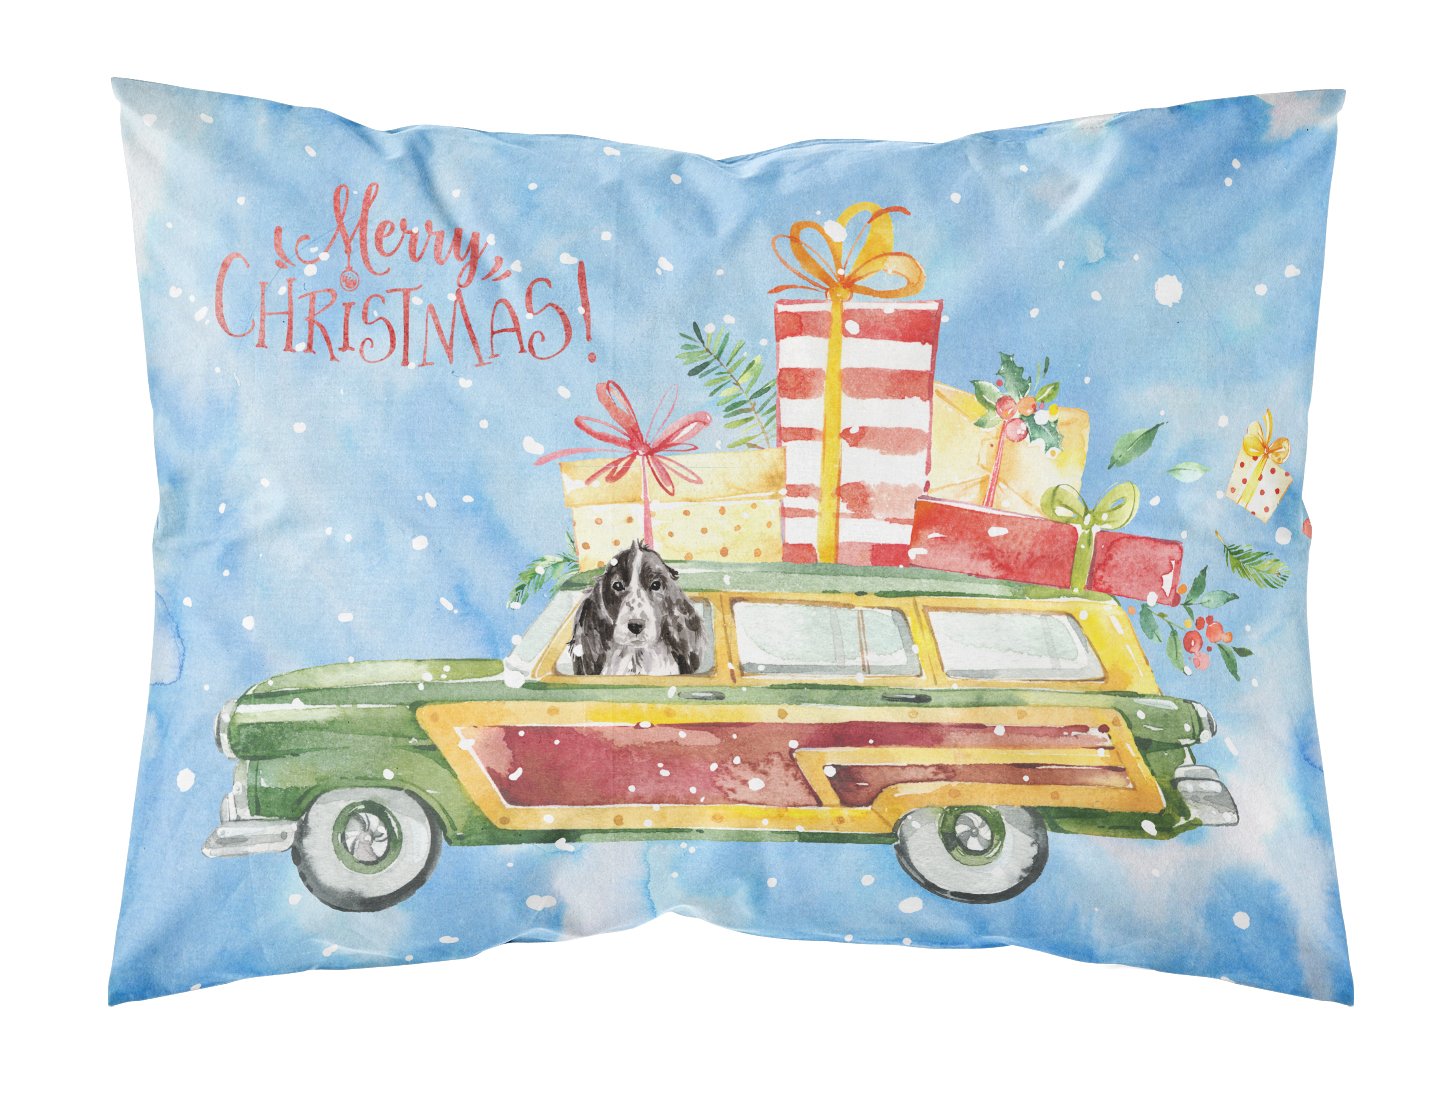 Merry Christmas Black Parti Cocker Spaniel Fabric Standard Pillowcase CK2450PILLOWCASE by Caroline's Treasures